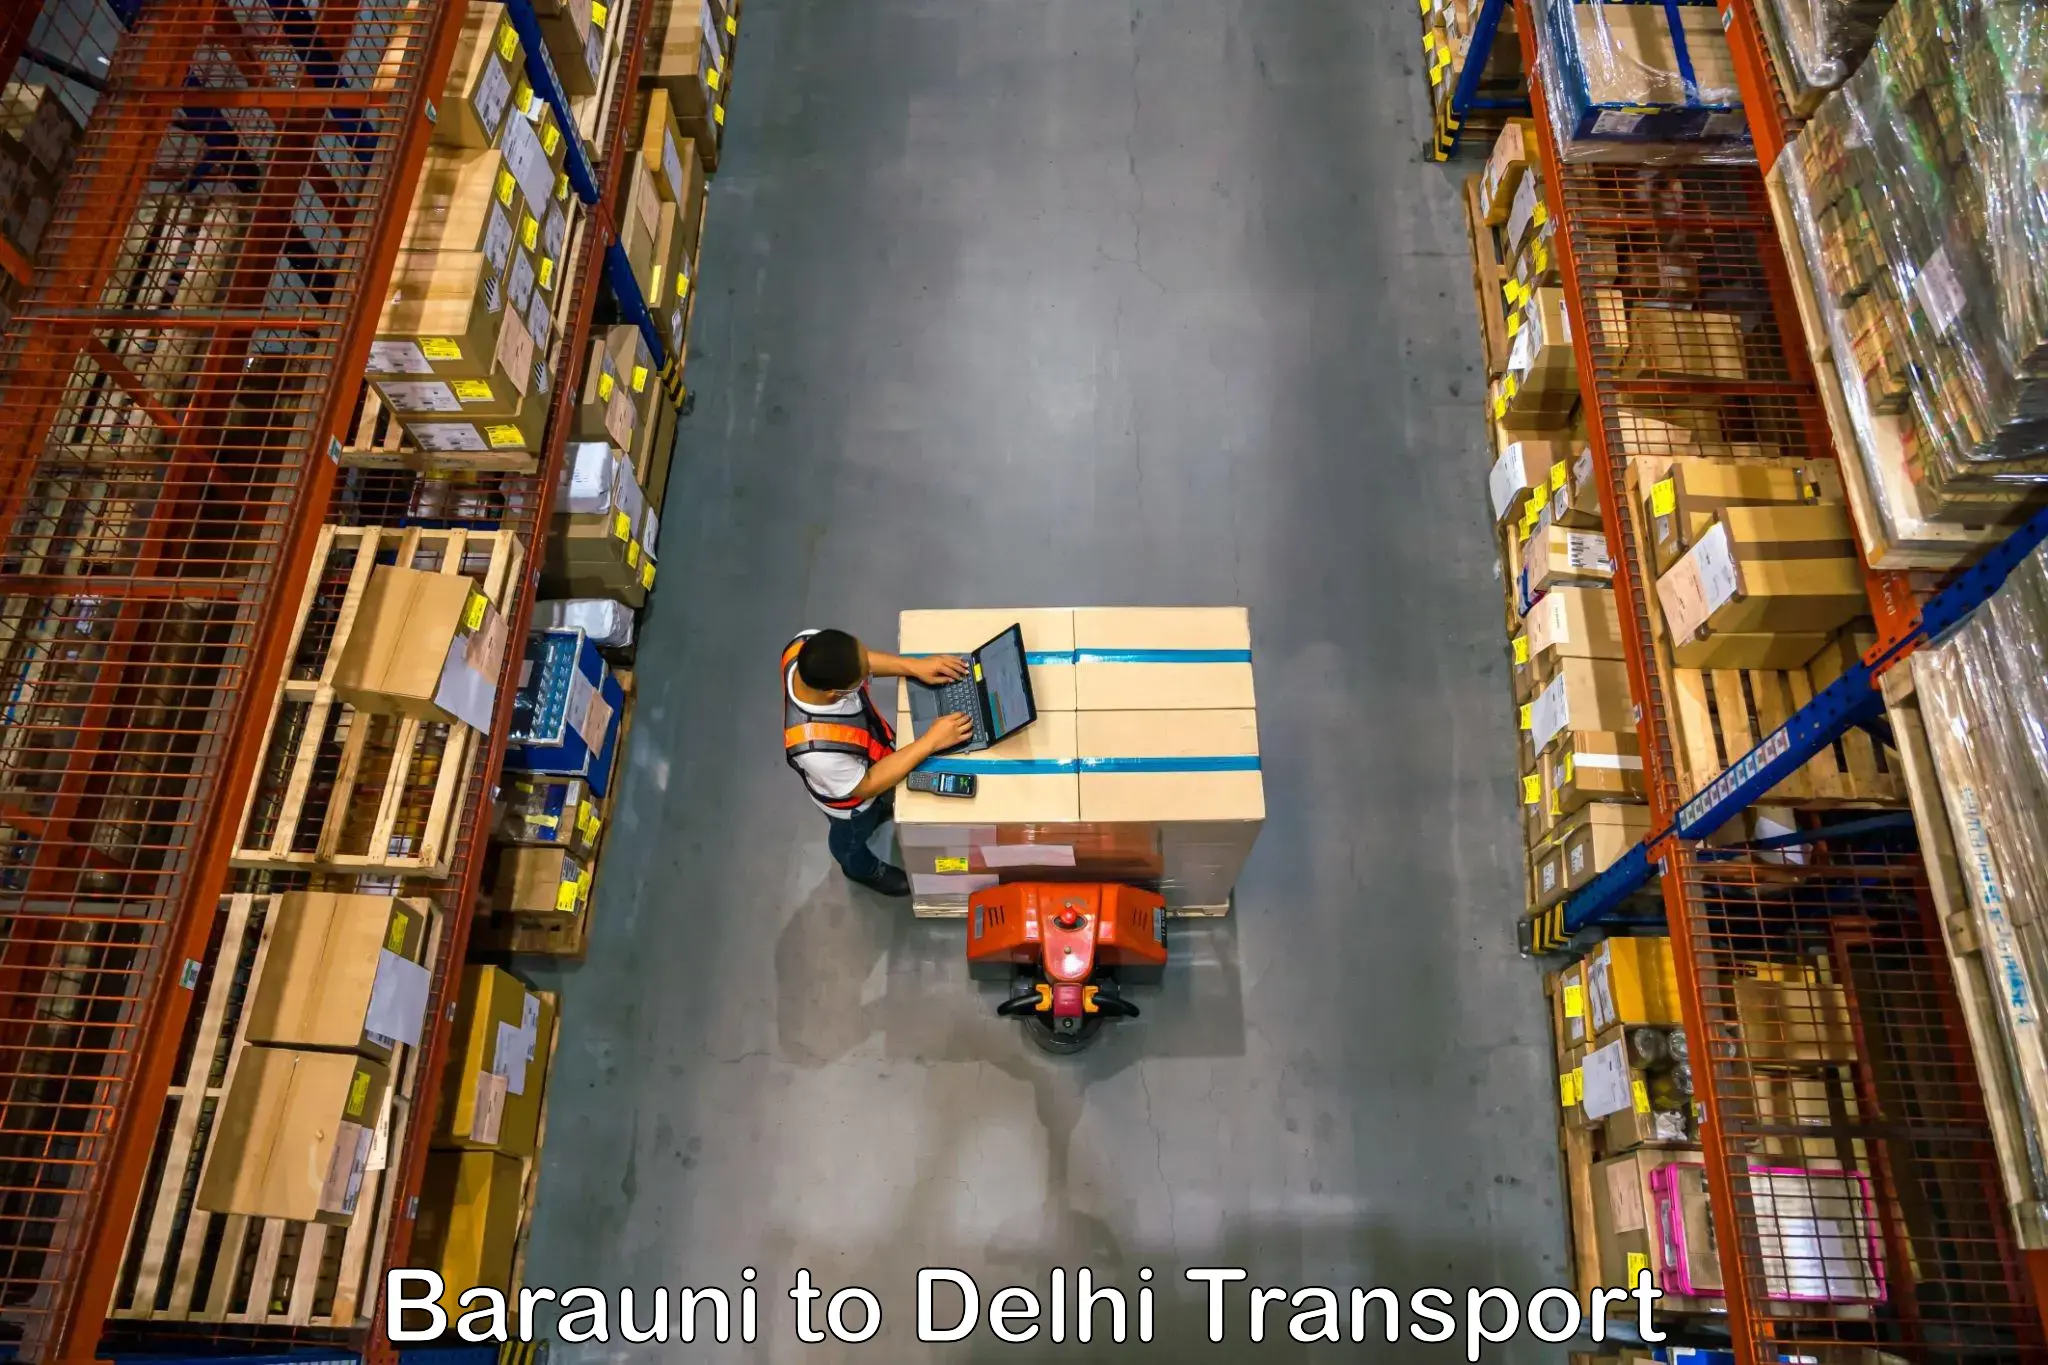 Shipping partner Barauni to NCR